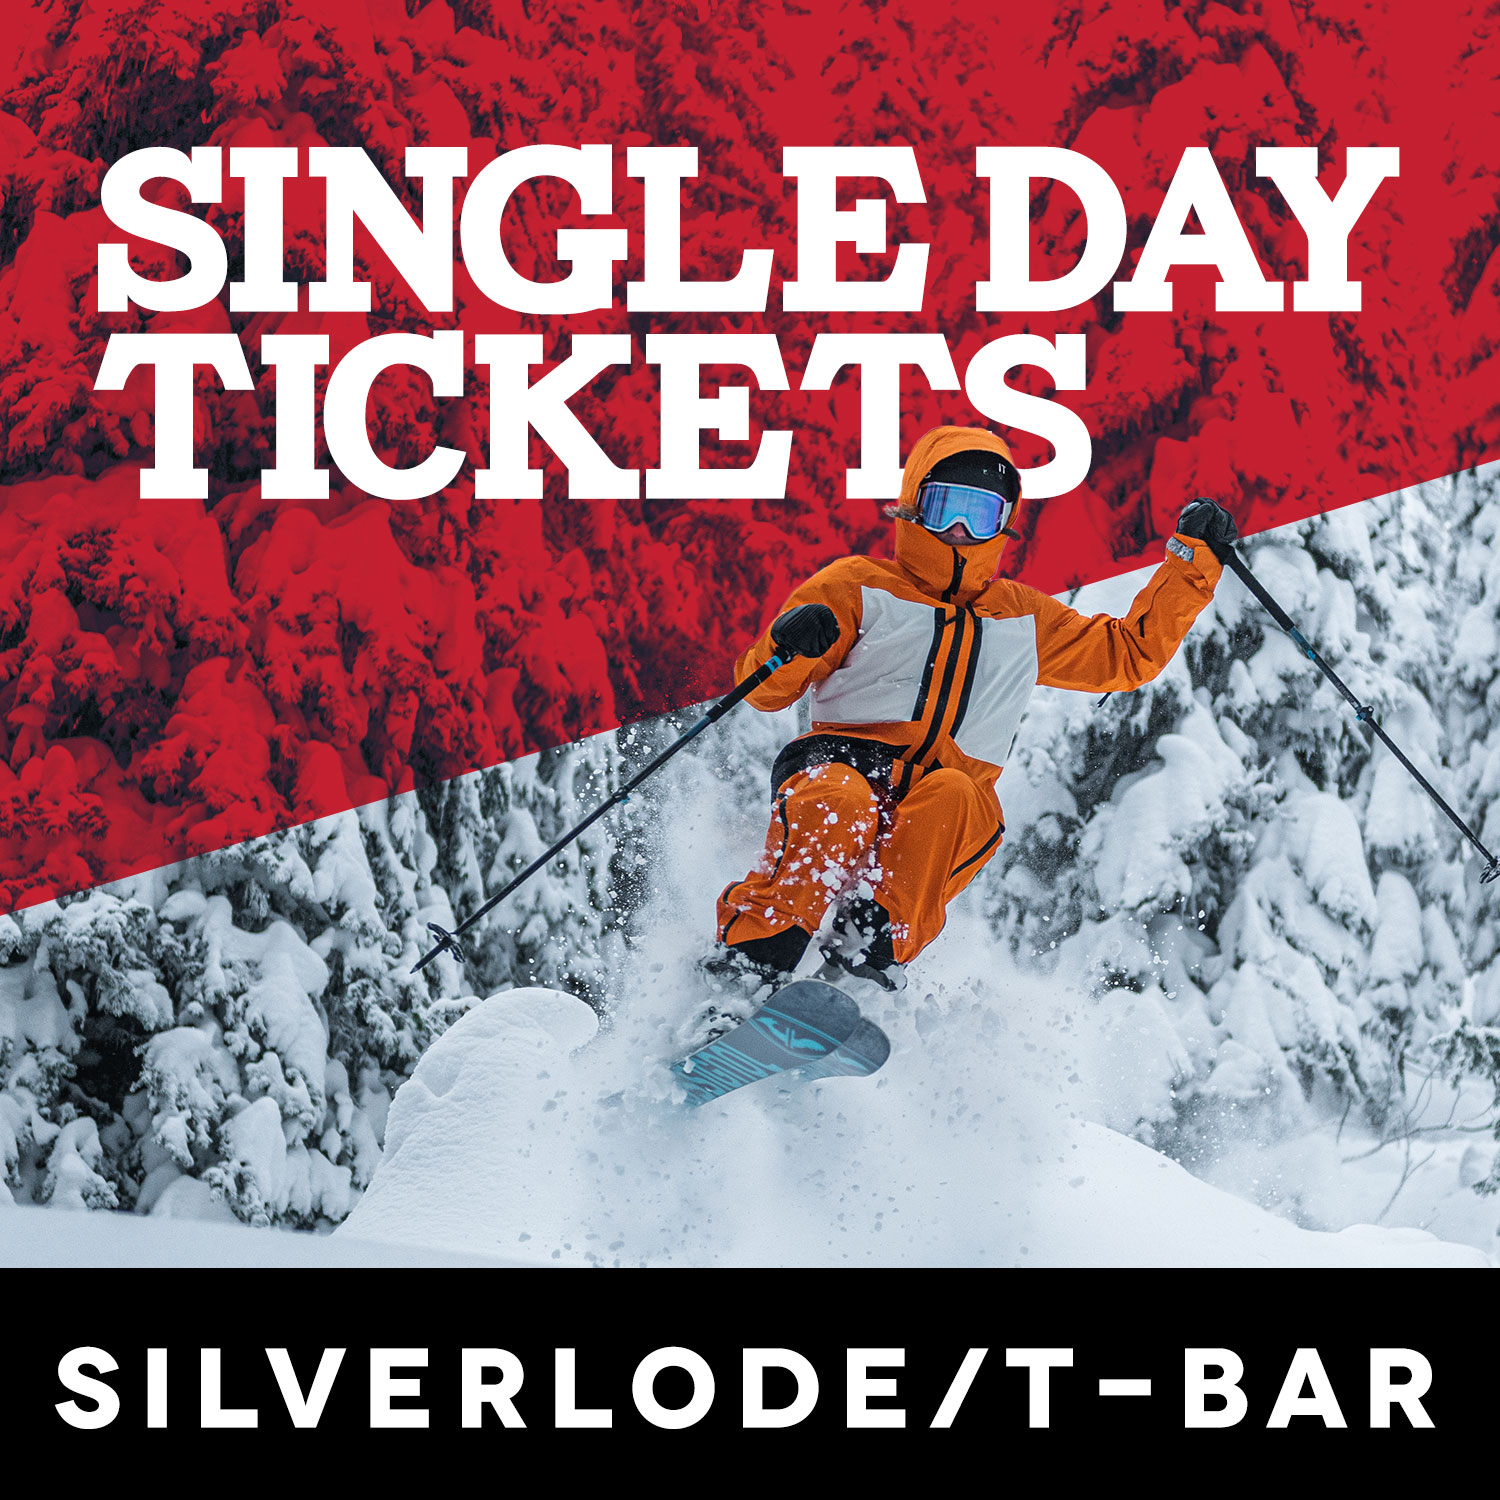 → Silverlode / T-bar